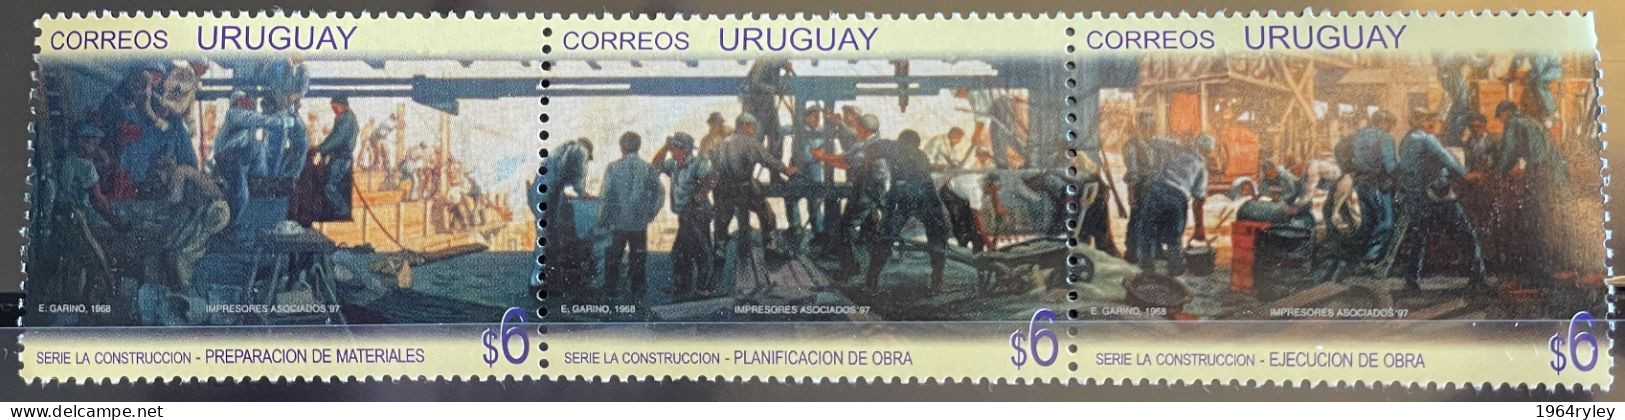 URUQUAY - SHEET - MNH**  - 1997  - # 2322/2324 - Uruguay